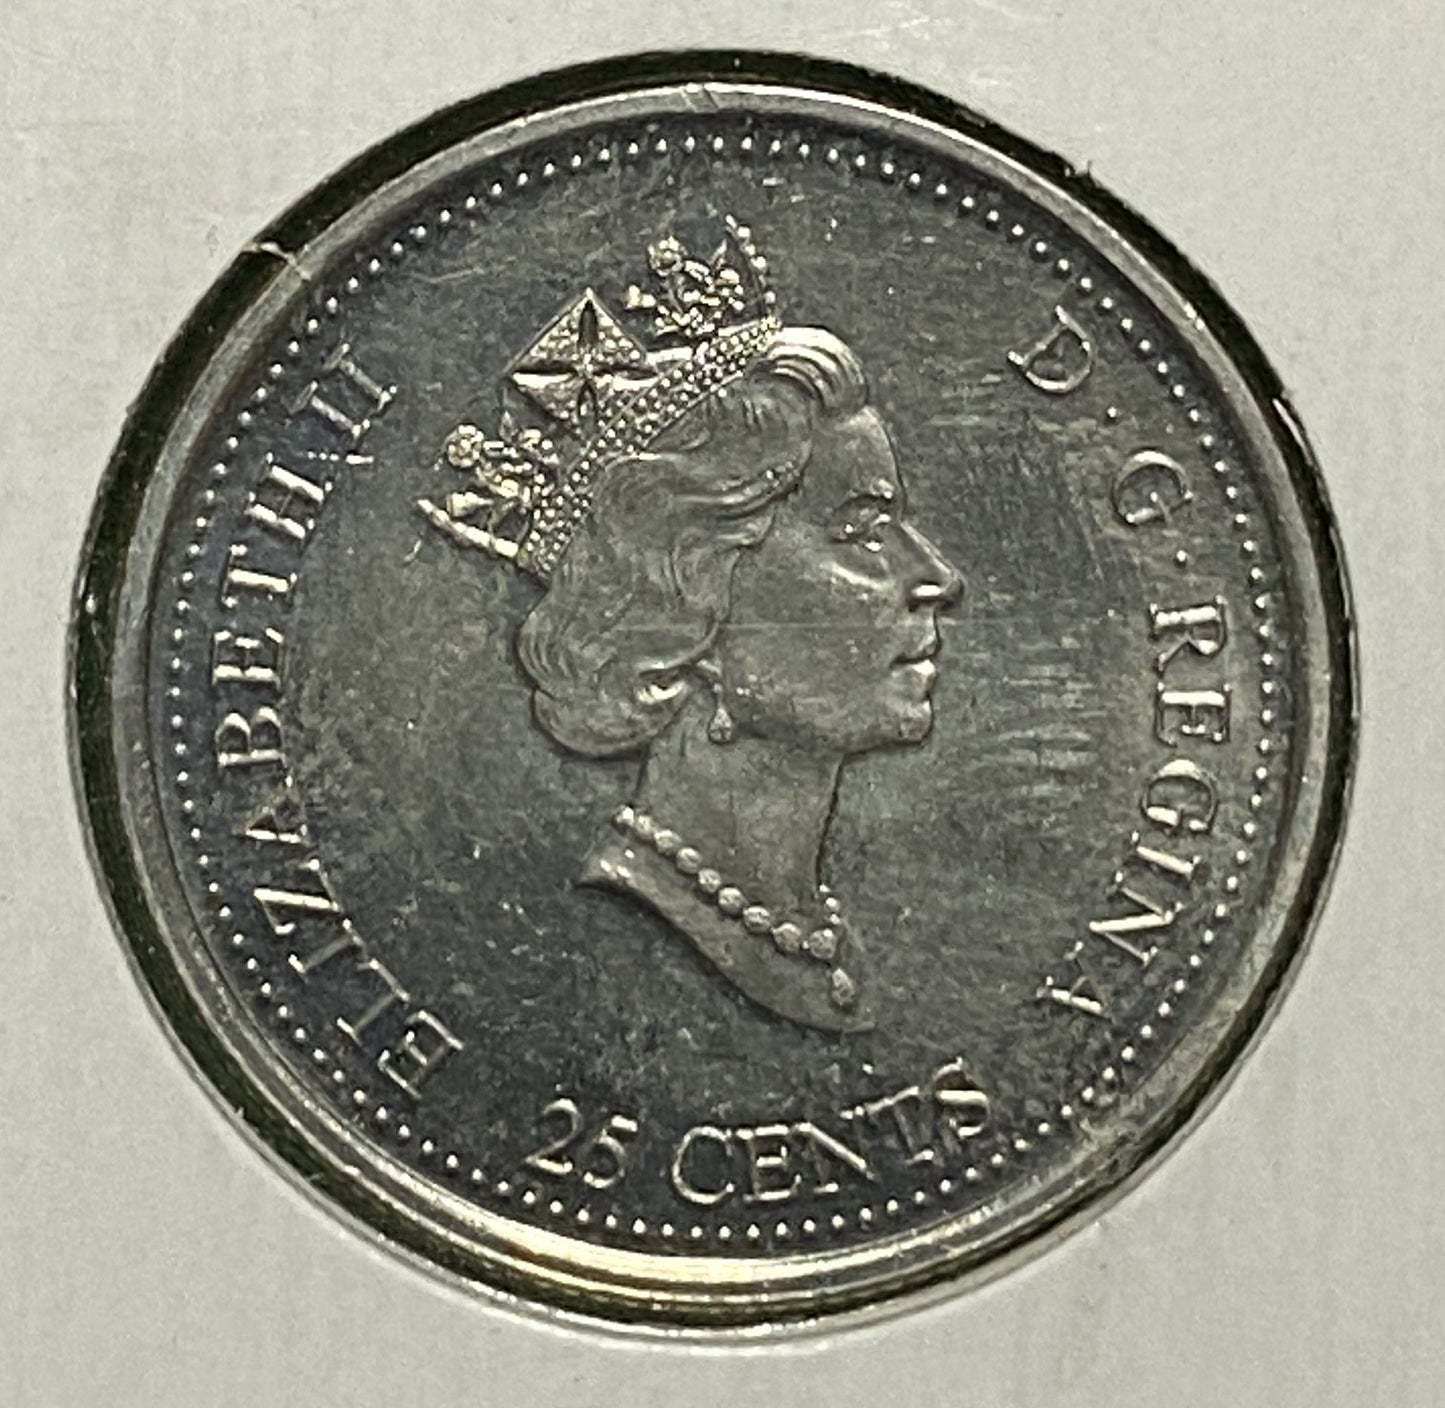 CANADIAN 1999 MILLENNIUM NOVEMBER Queen Elizabeth II  25 CENTS QUARTER COIN AU / UNC CONDITION